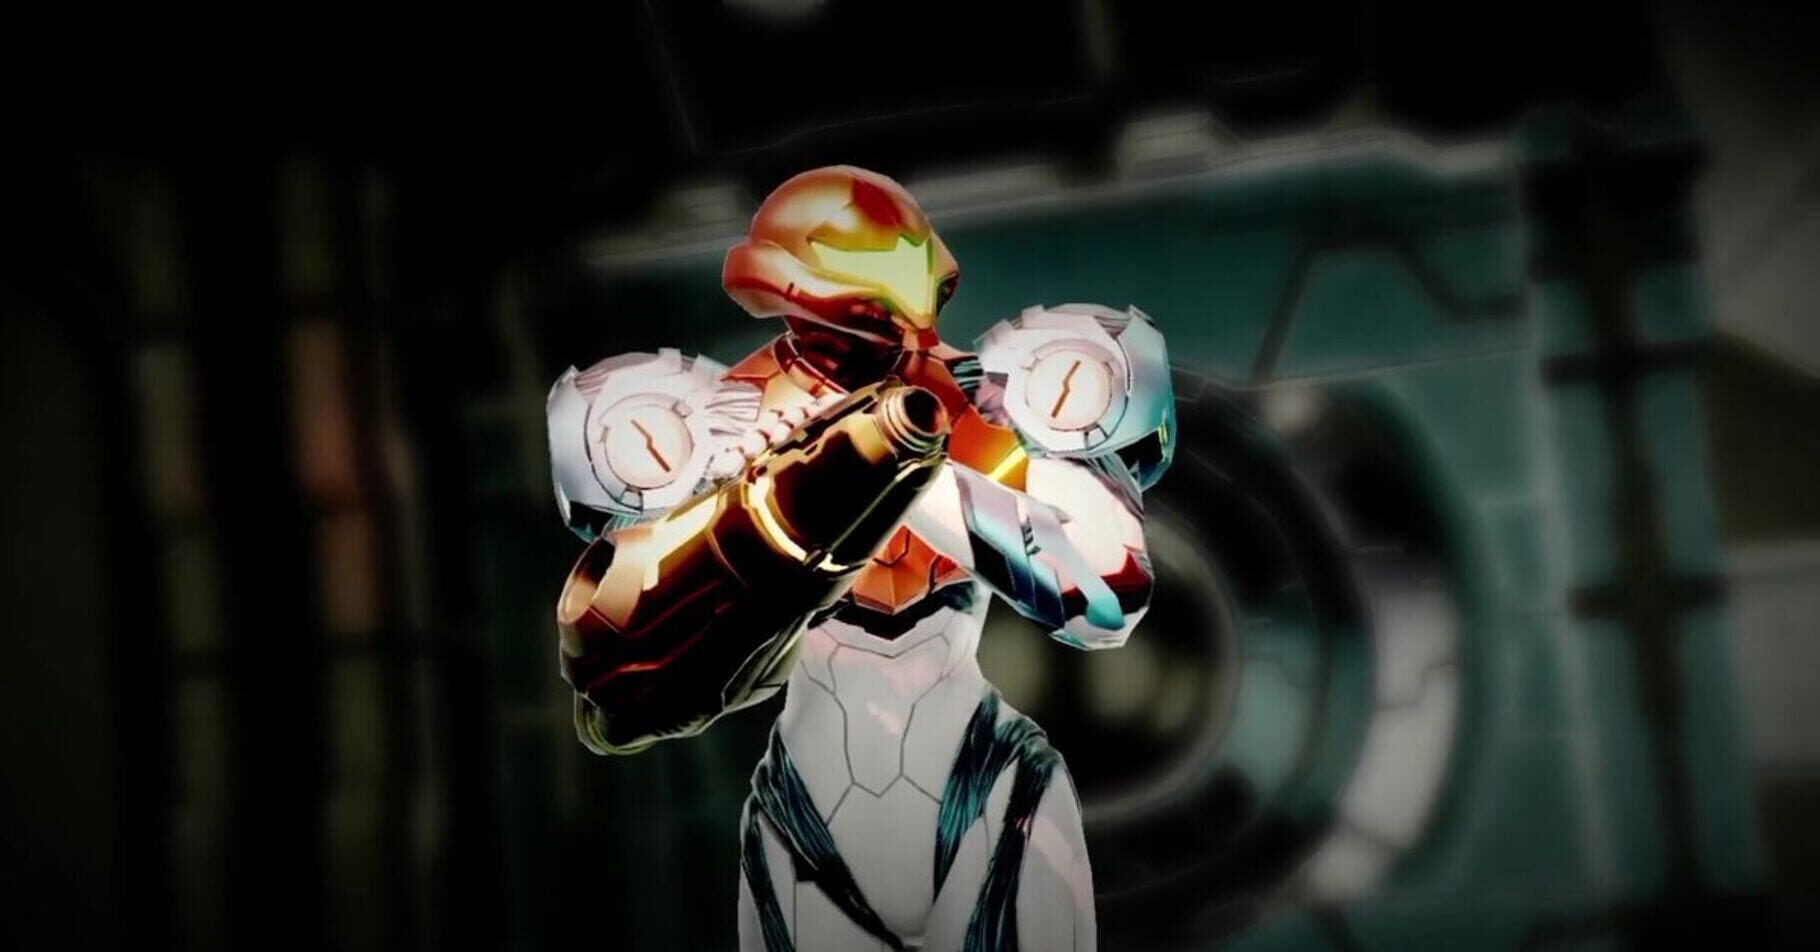 Metroid Dread screenshot